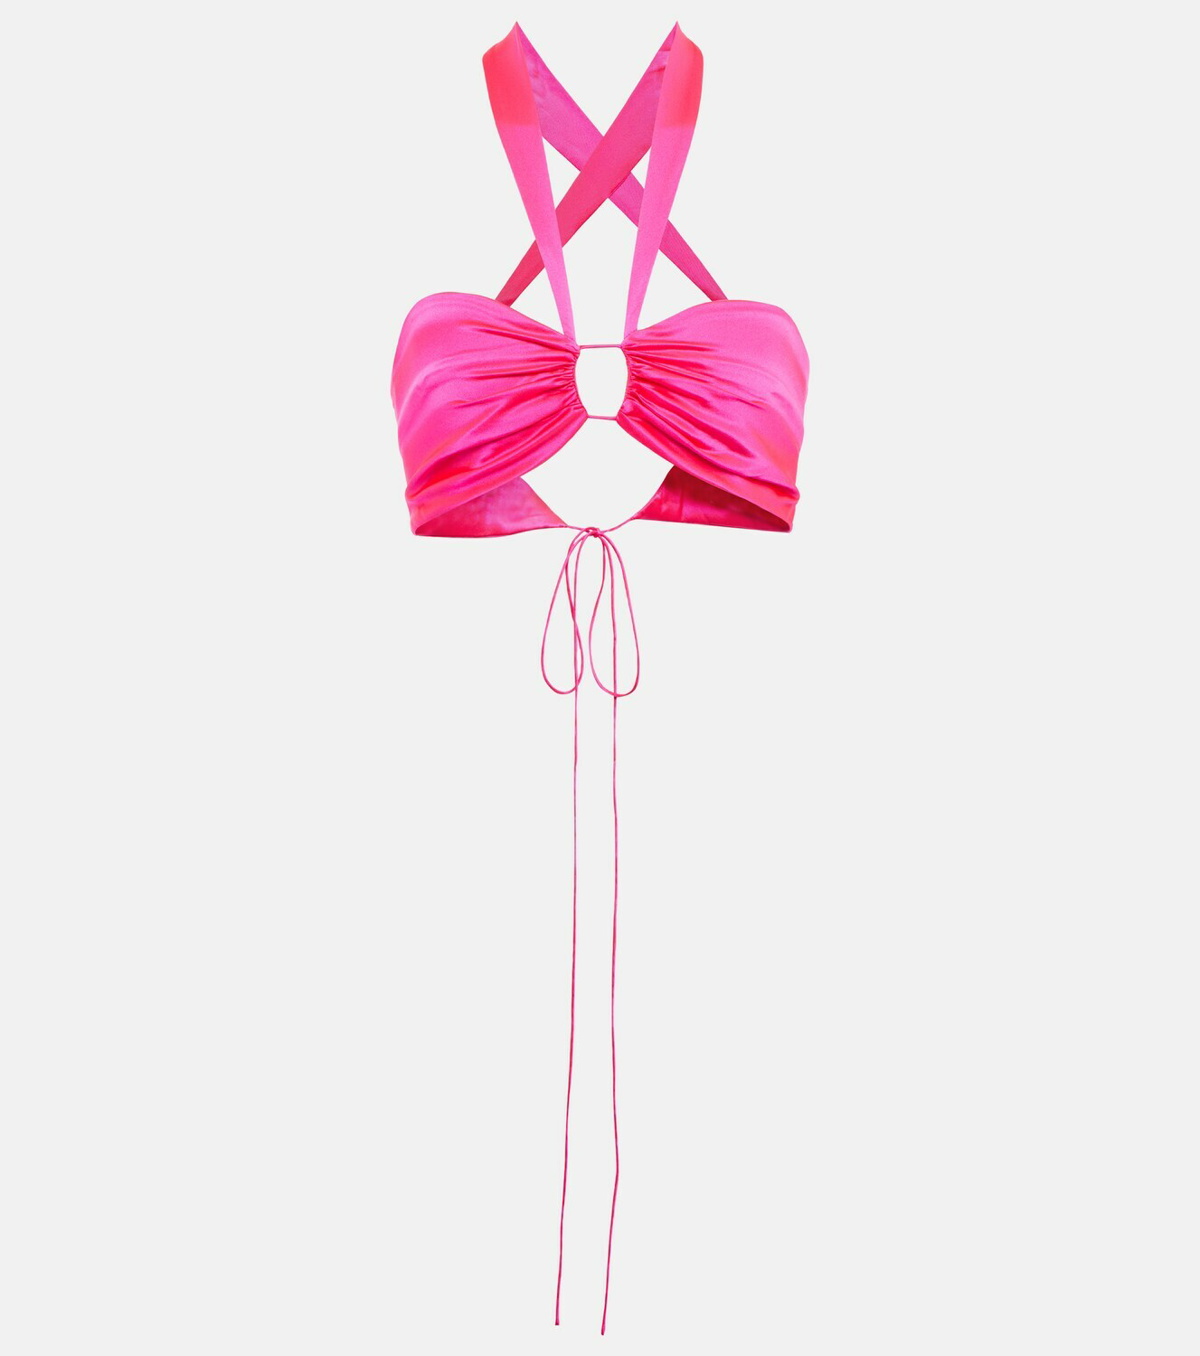 Silk charmeuse bra top in pink - The Sei